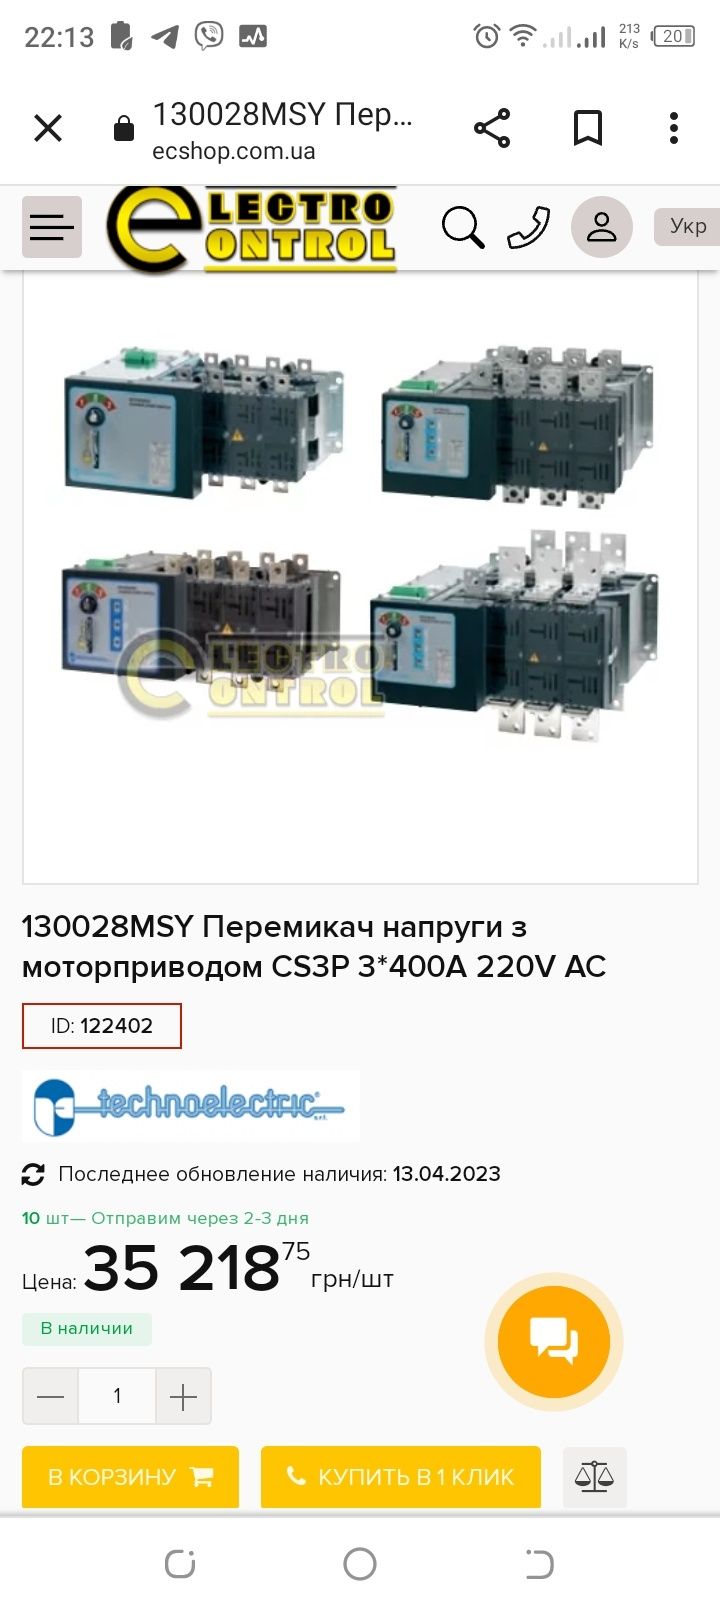 АВР 3/400 technoelectric